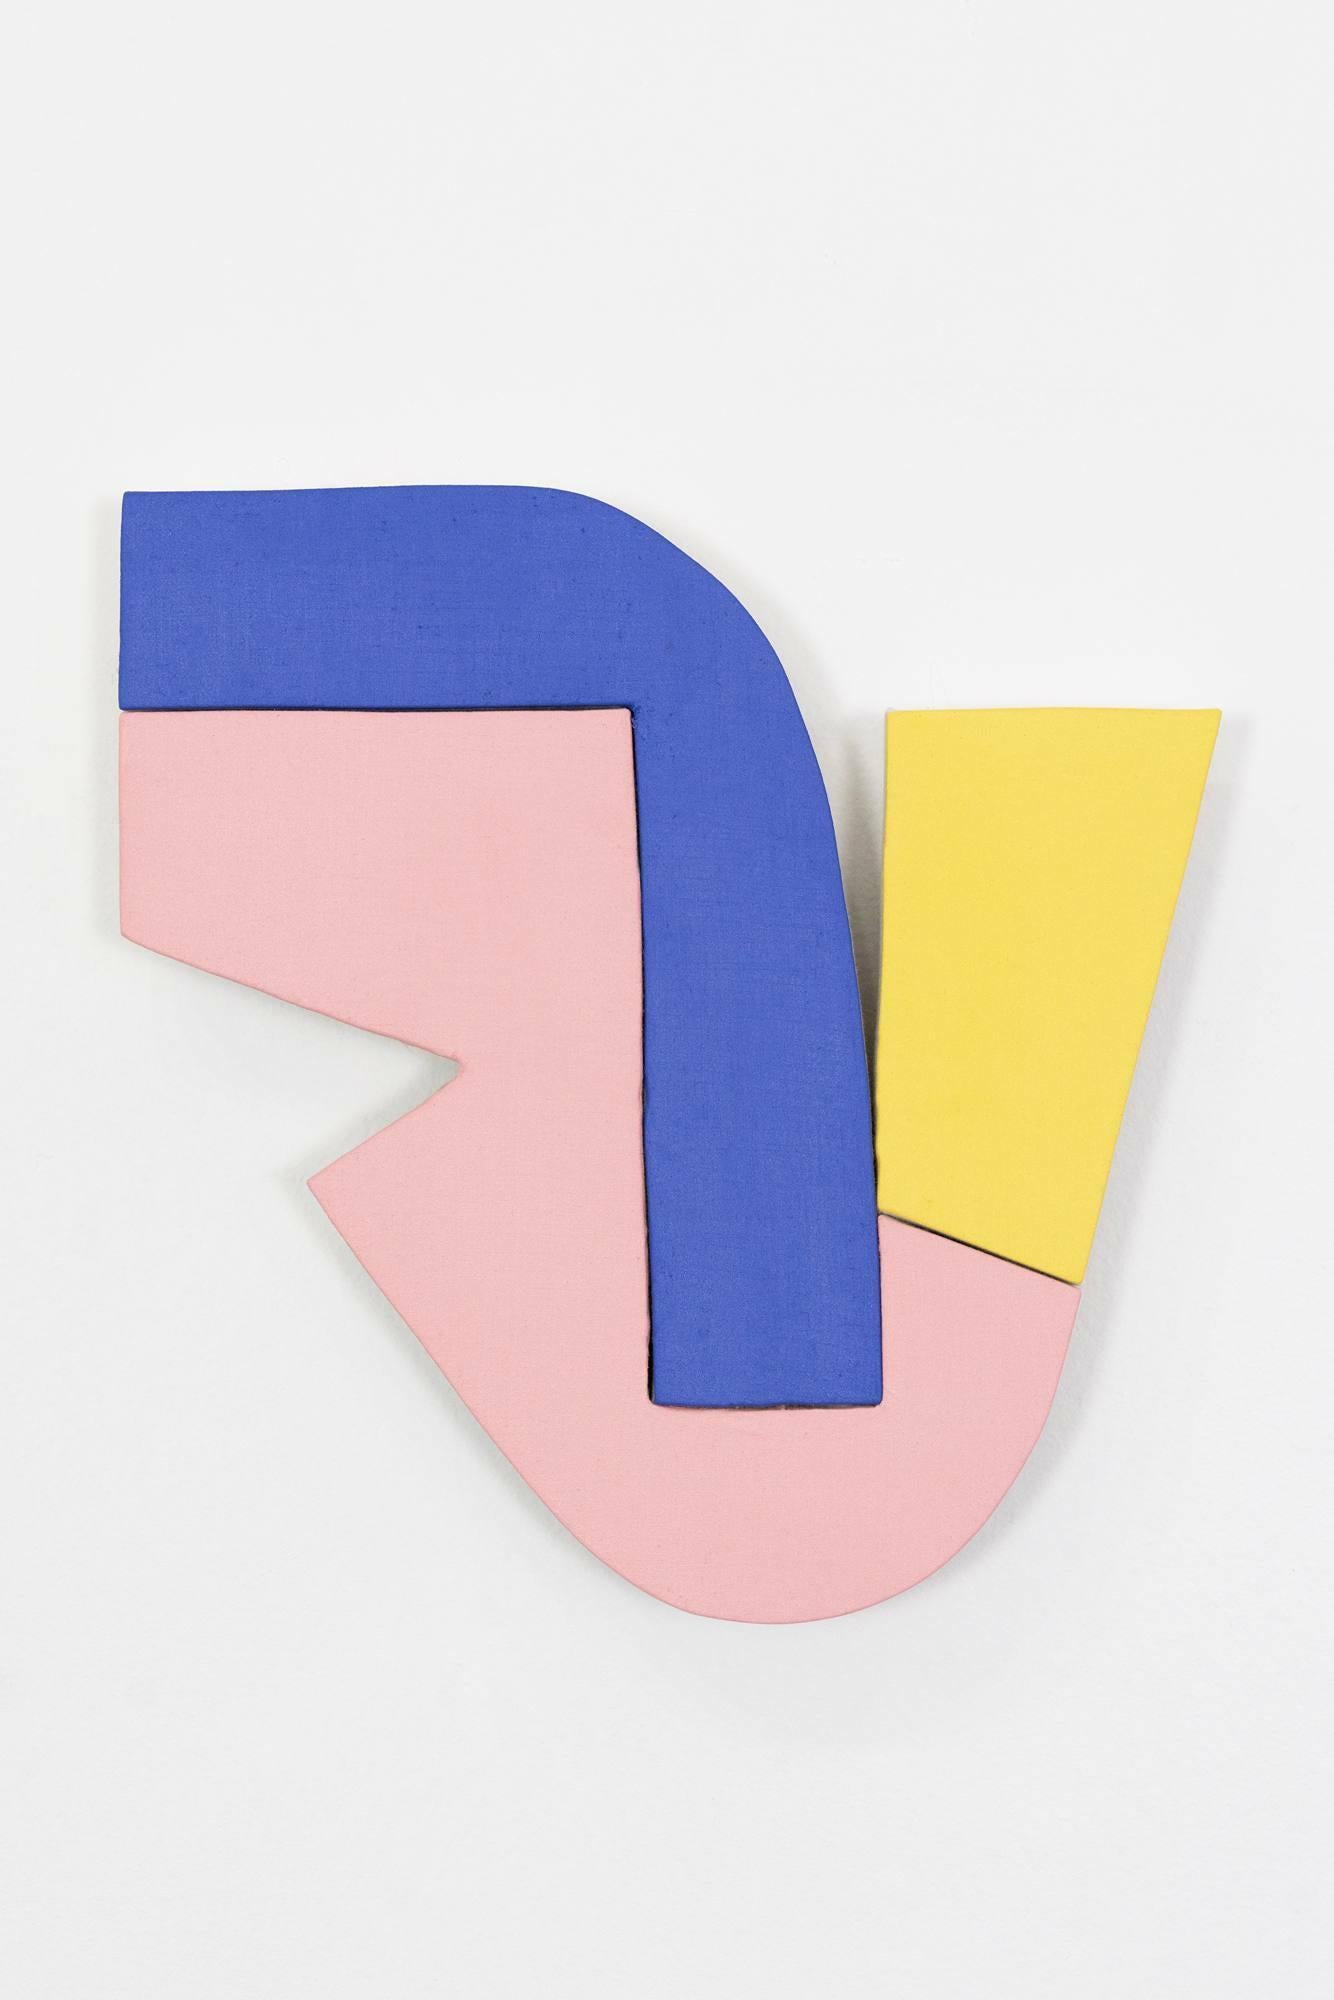 Jason Matherly Abstract Sculpture - "22-11" Mixed Media Wall Sculpture painting-  yellow, blue, pink